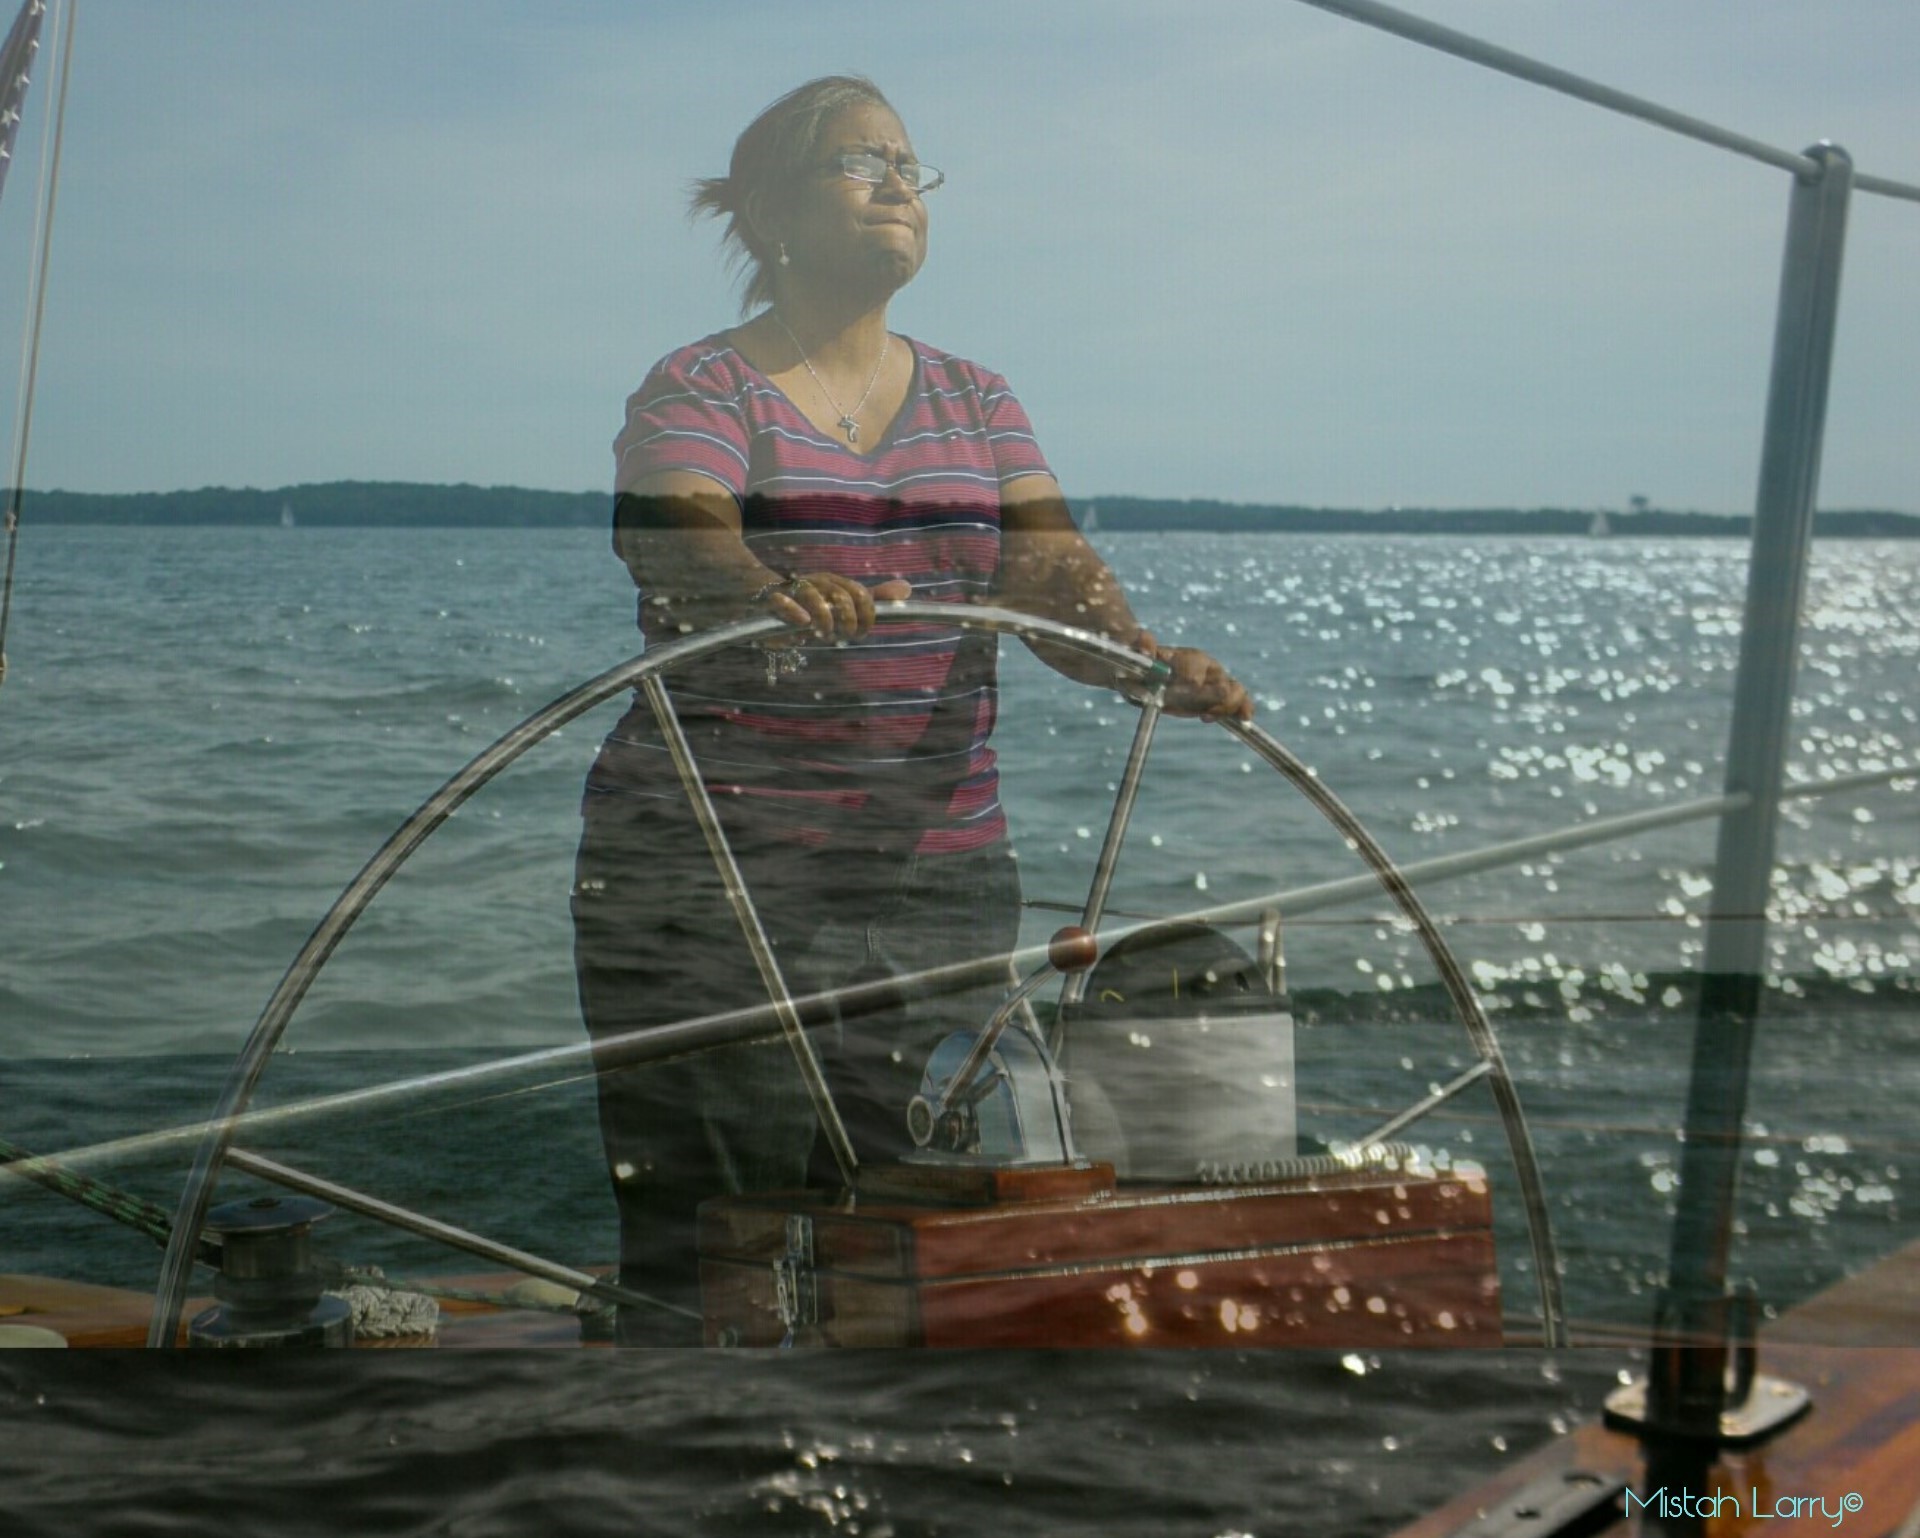 Women steering the schooner with water reflection all around her